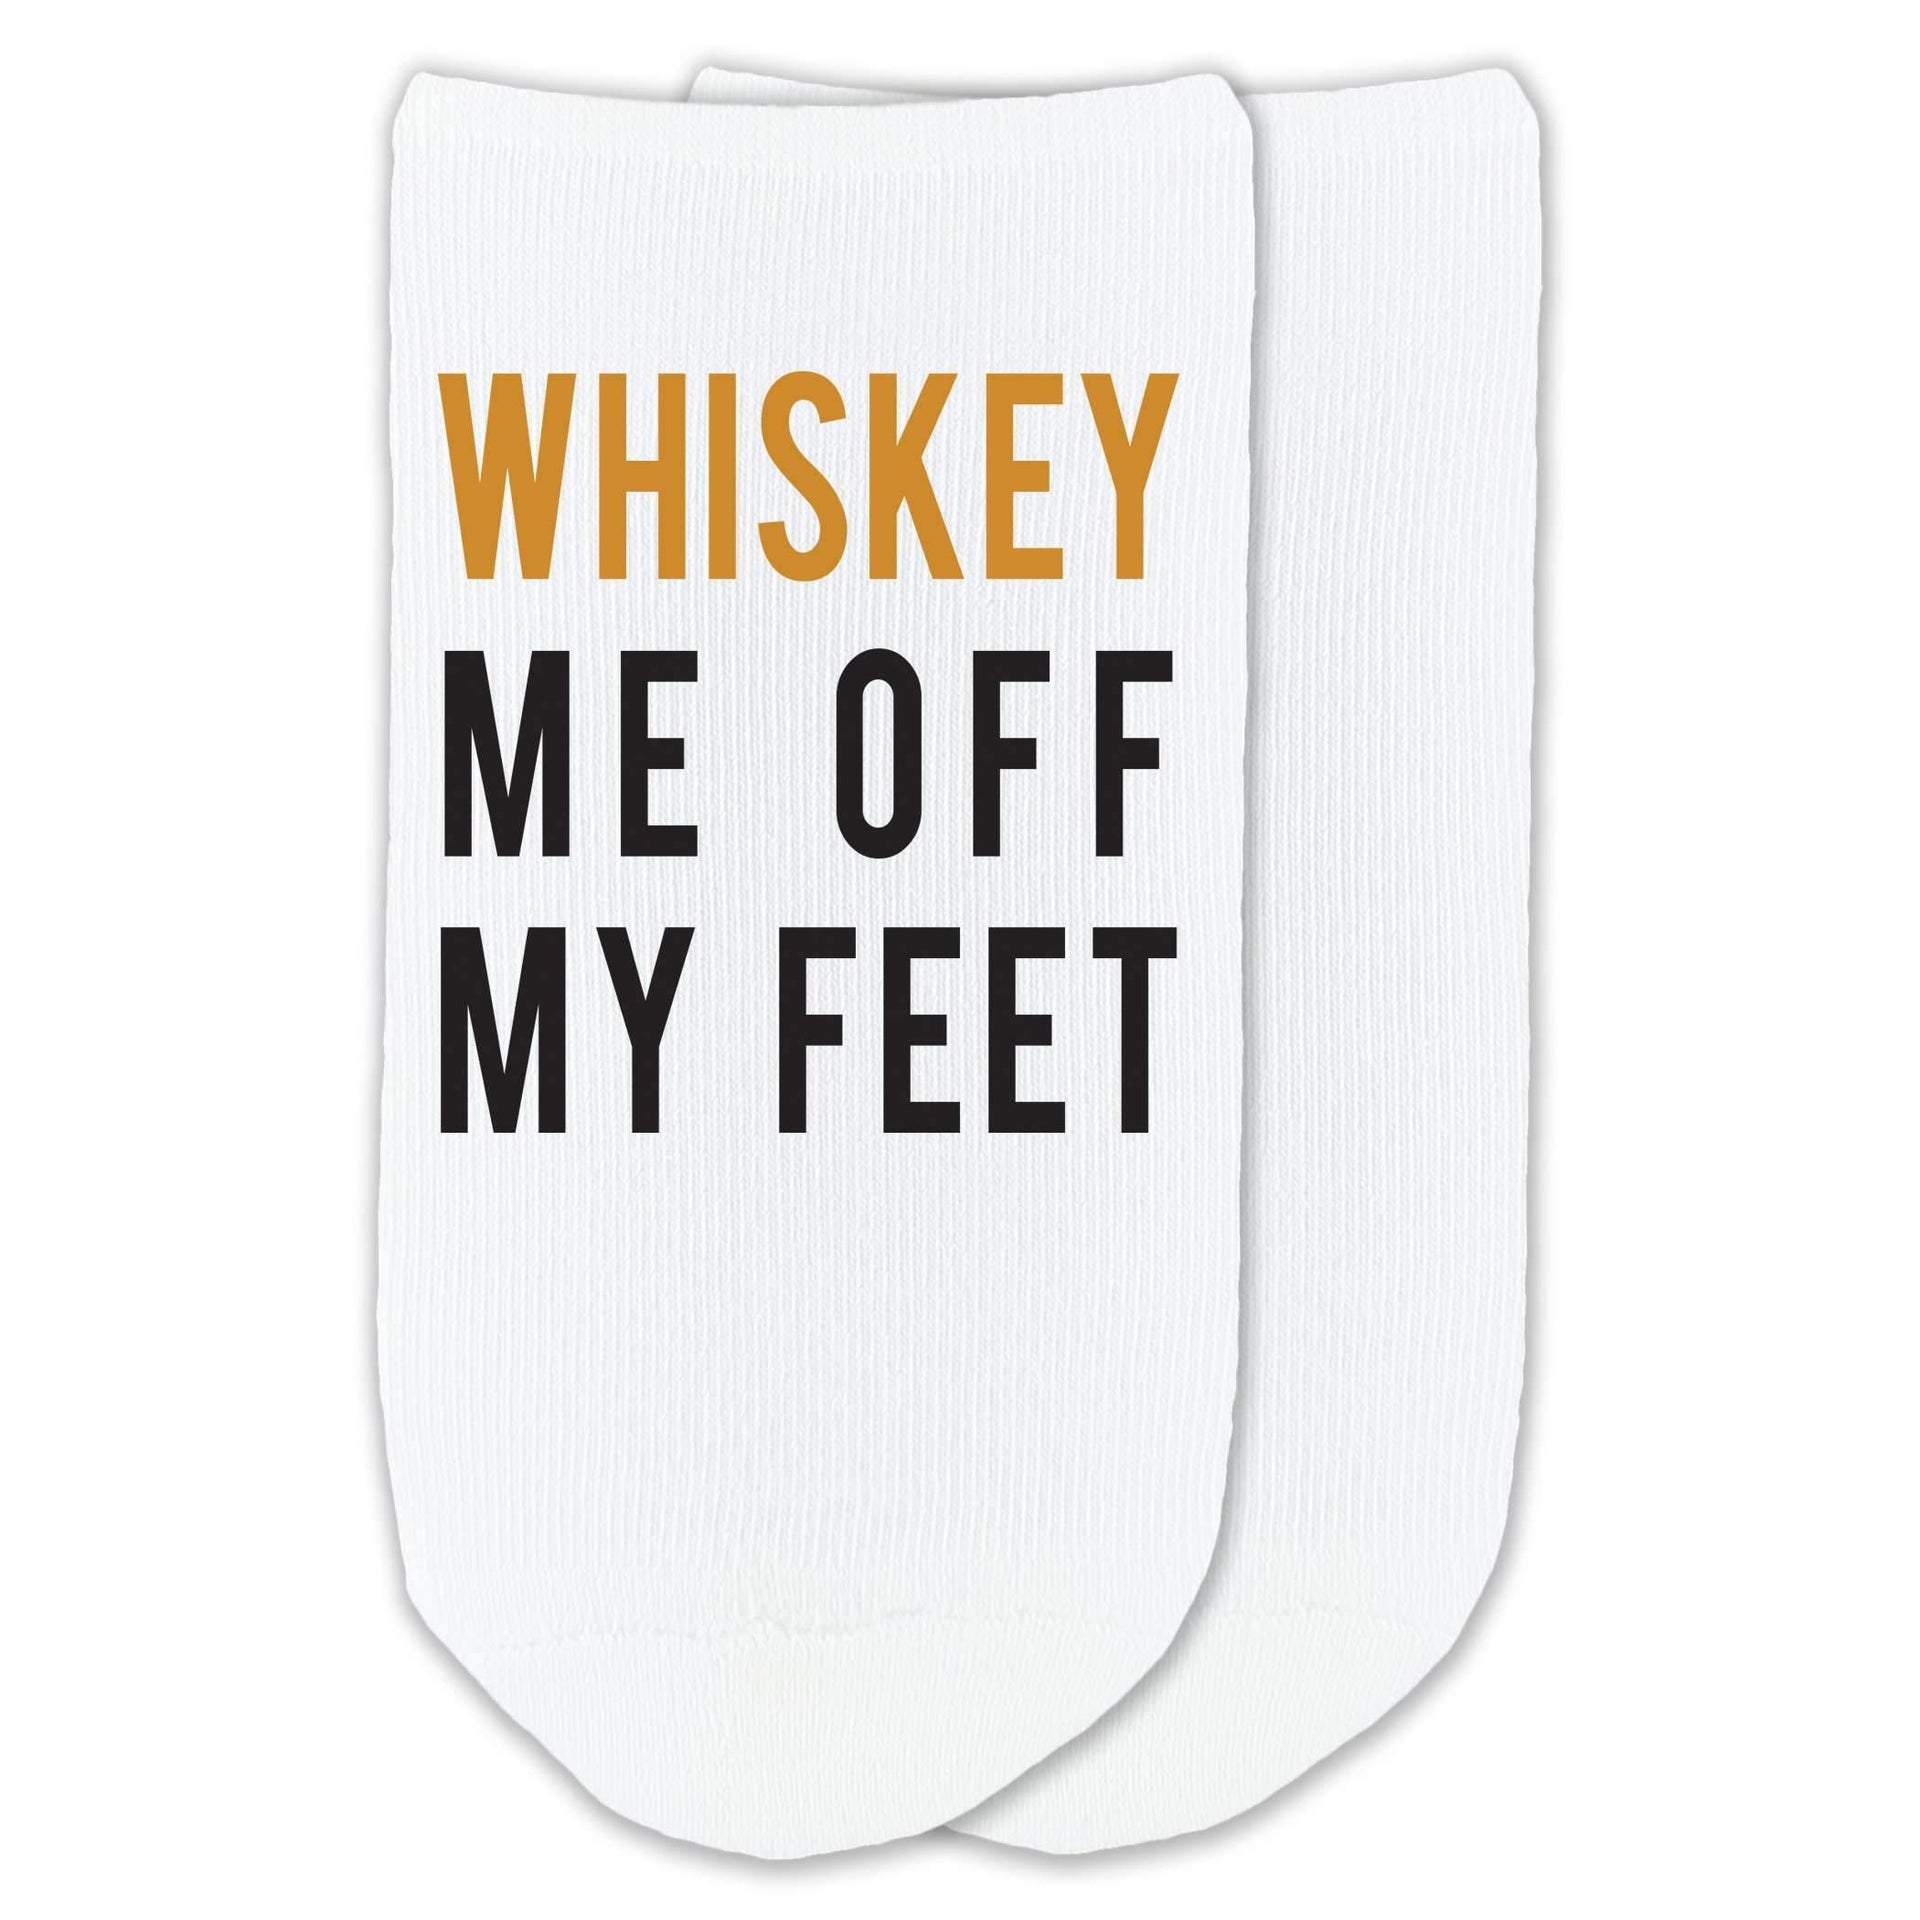 Whiskey me off my feet custom printed on no show socks.